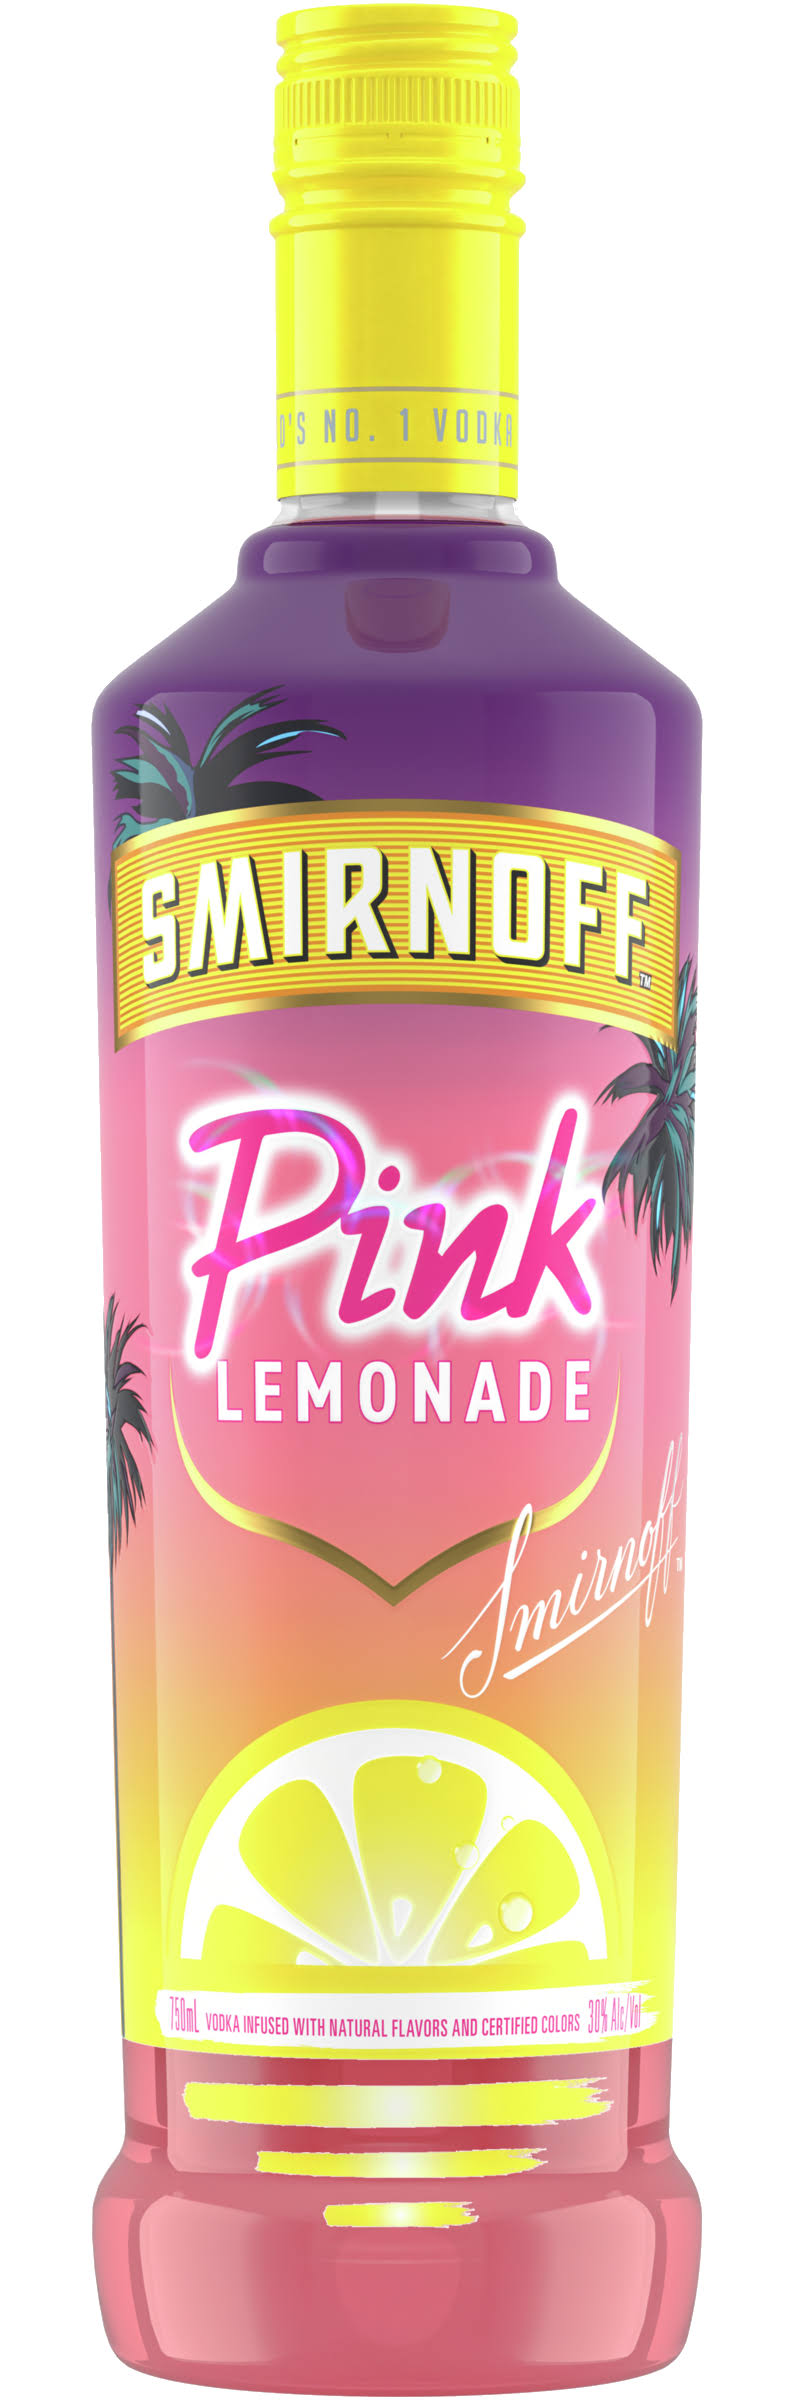 Smirnoff Pink Lemonade Vodka 75cL Blush Pink